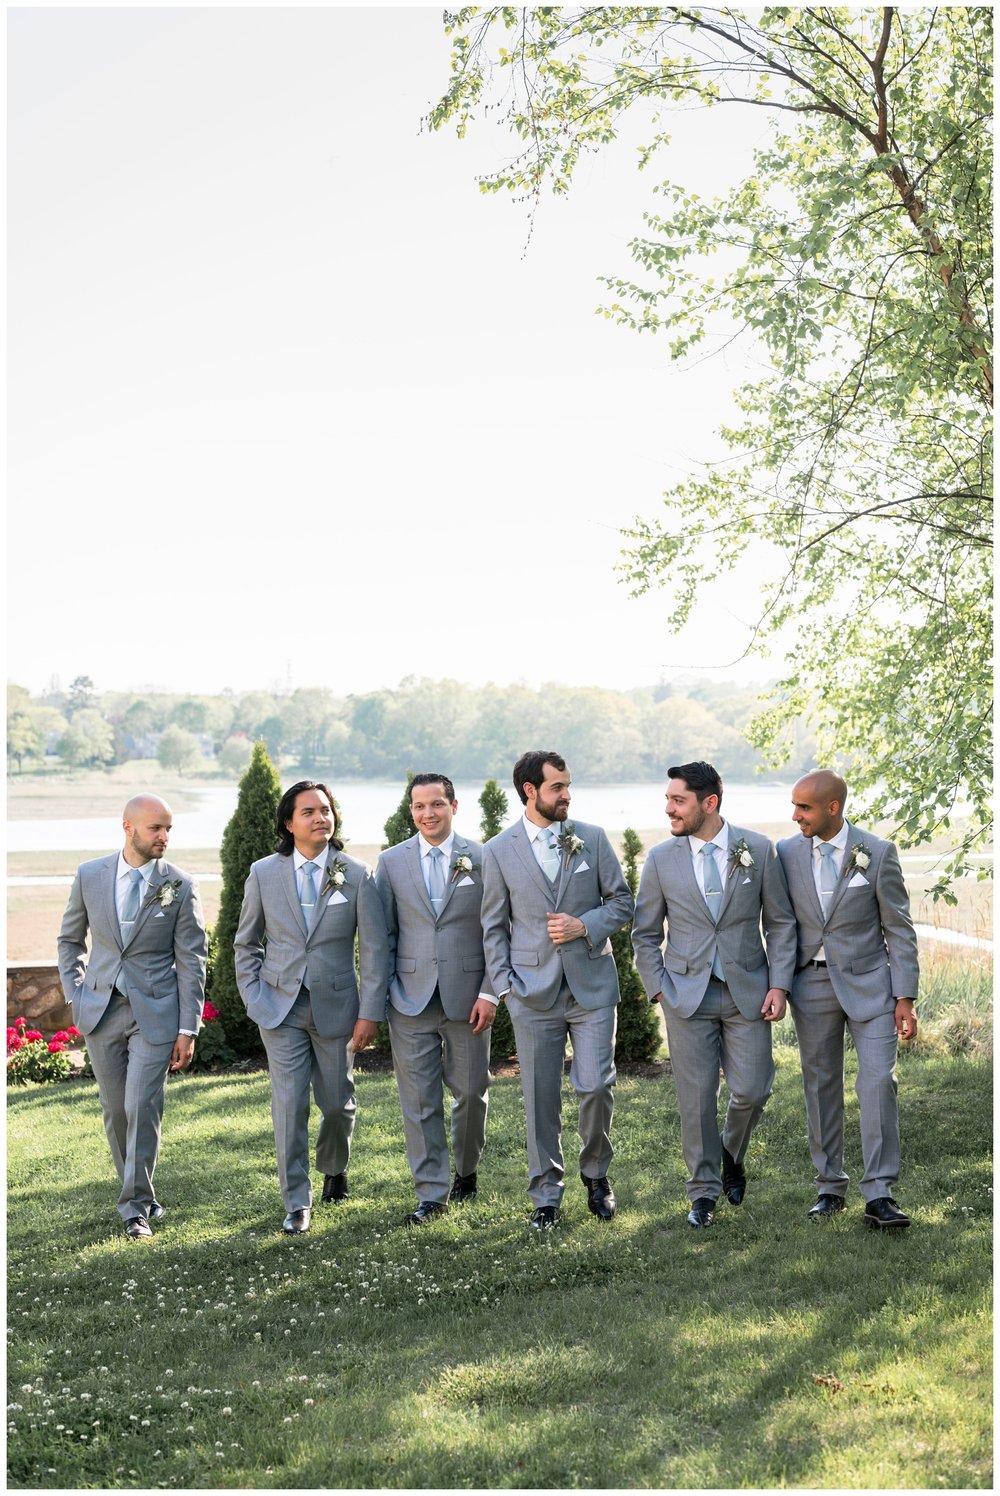 groom with groomsmen in gray suits walking under a tree